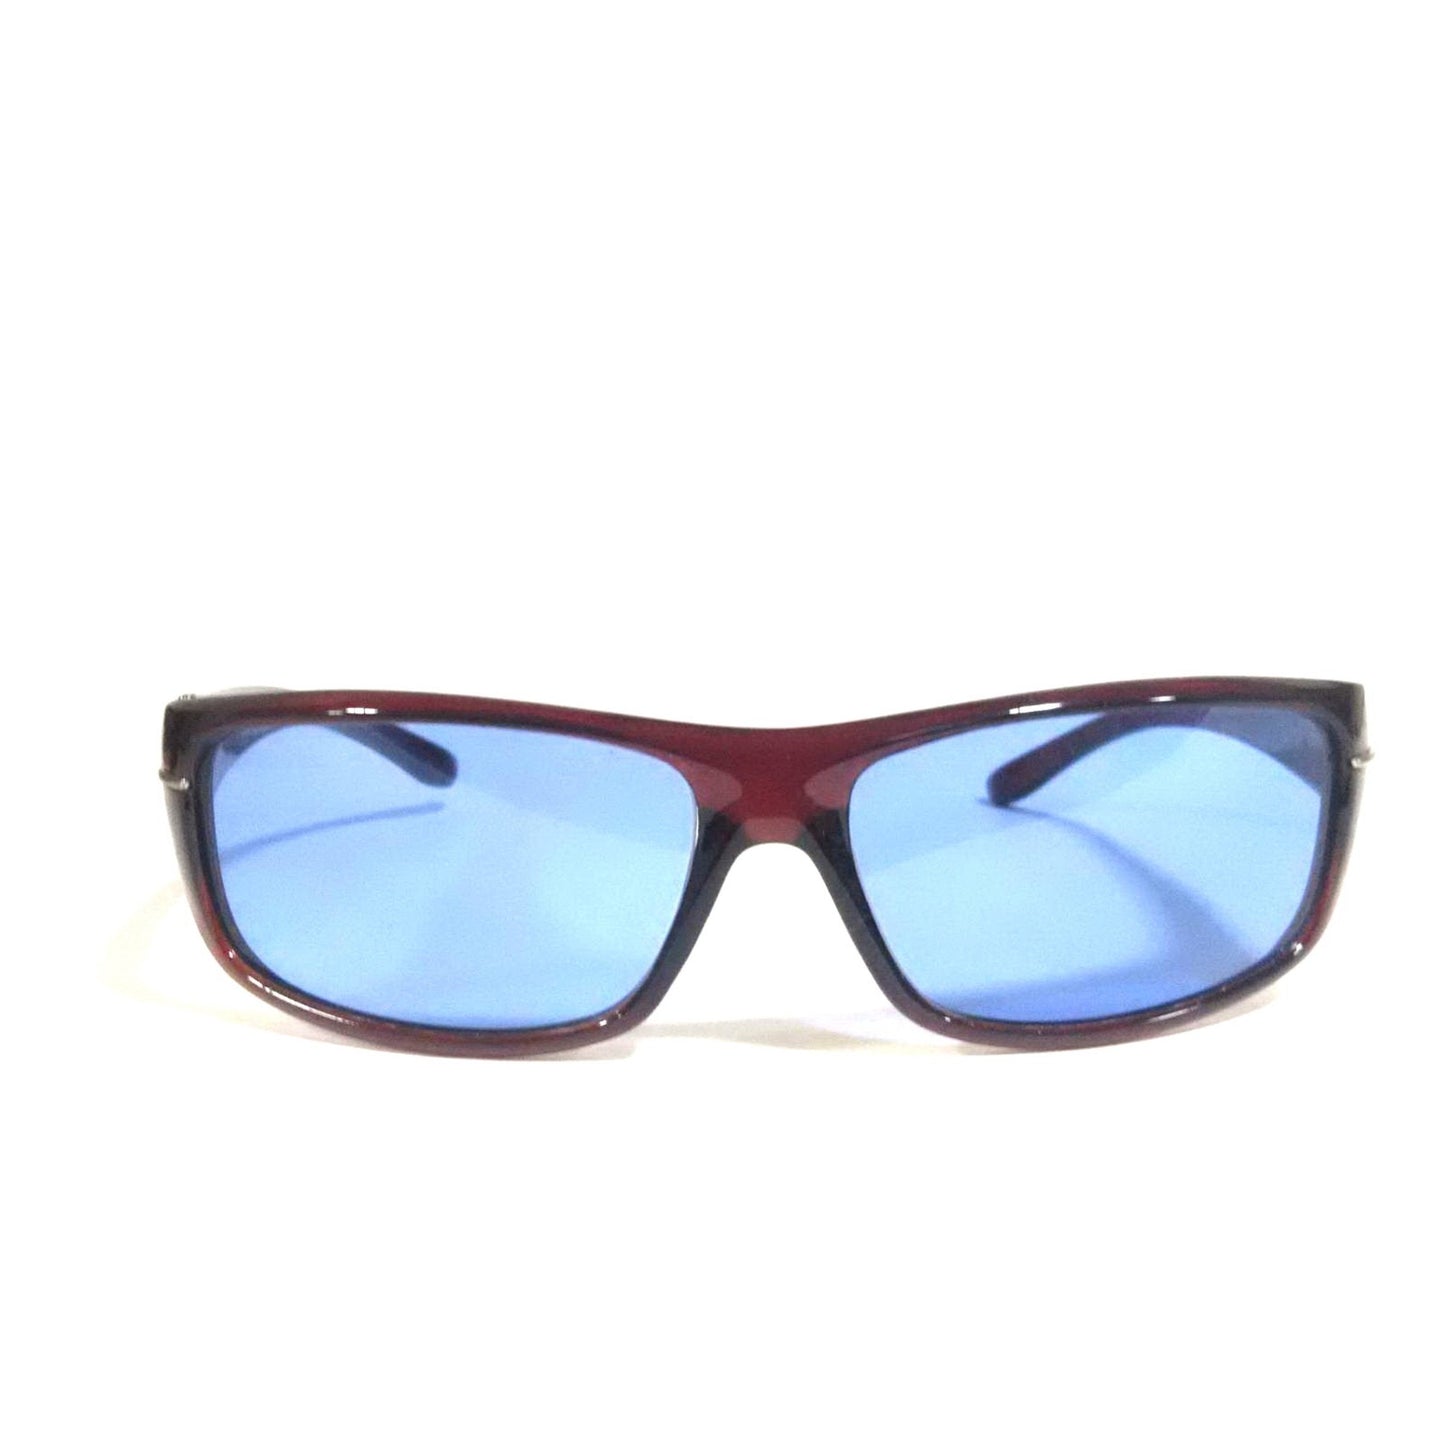 Brown Wraparound Sunglasses Adventure in Style